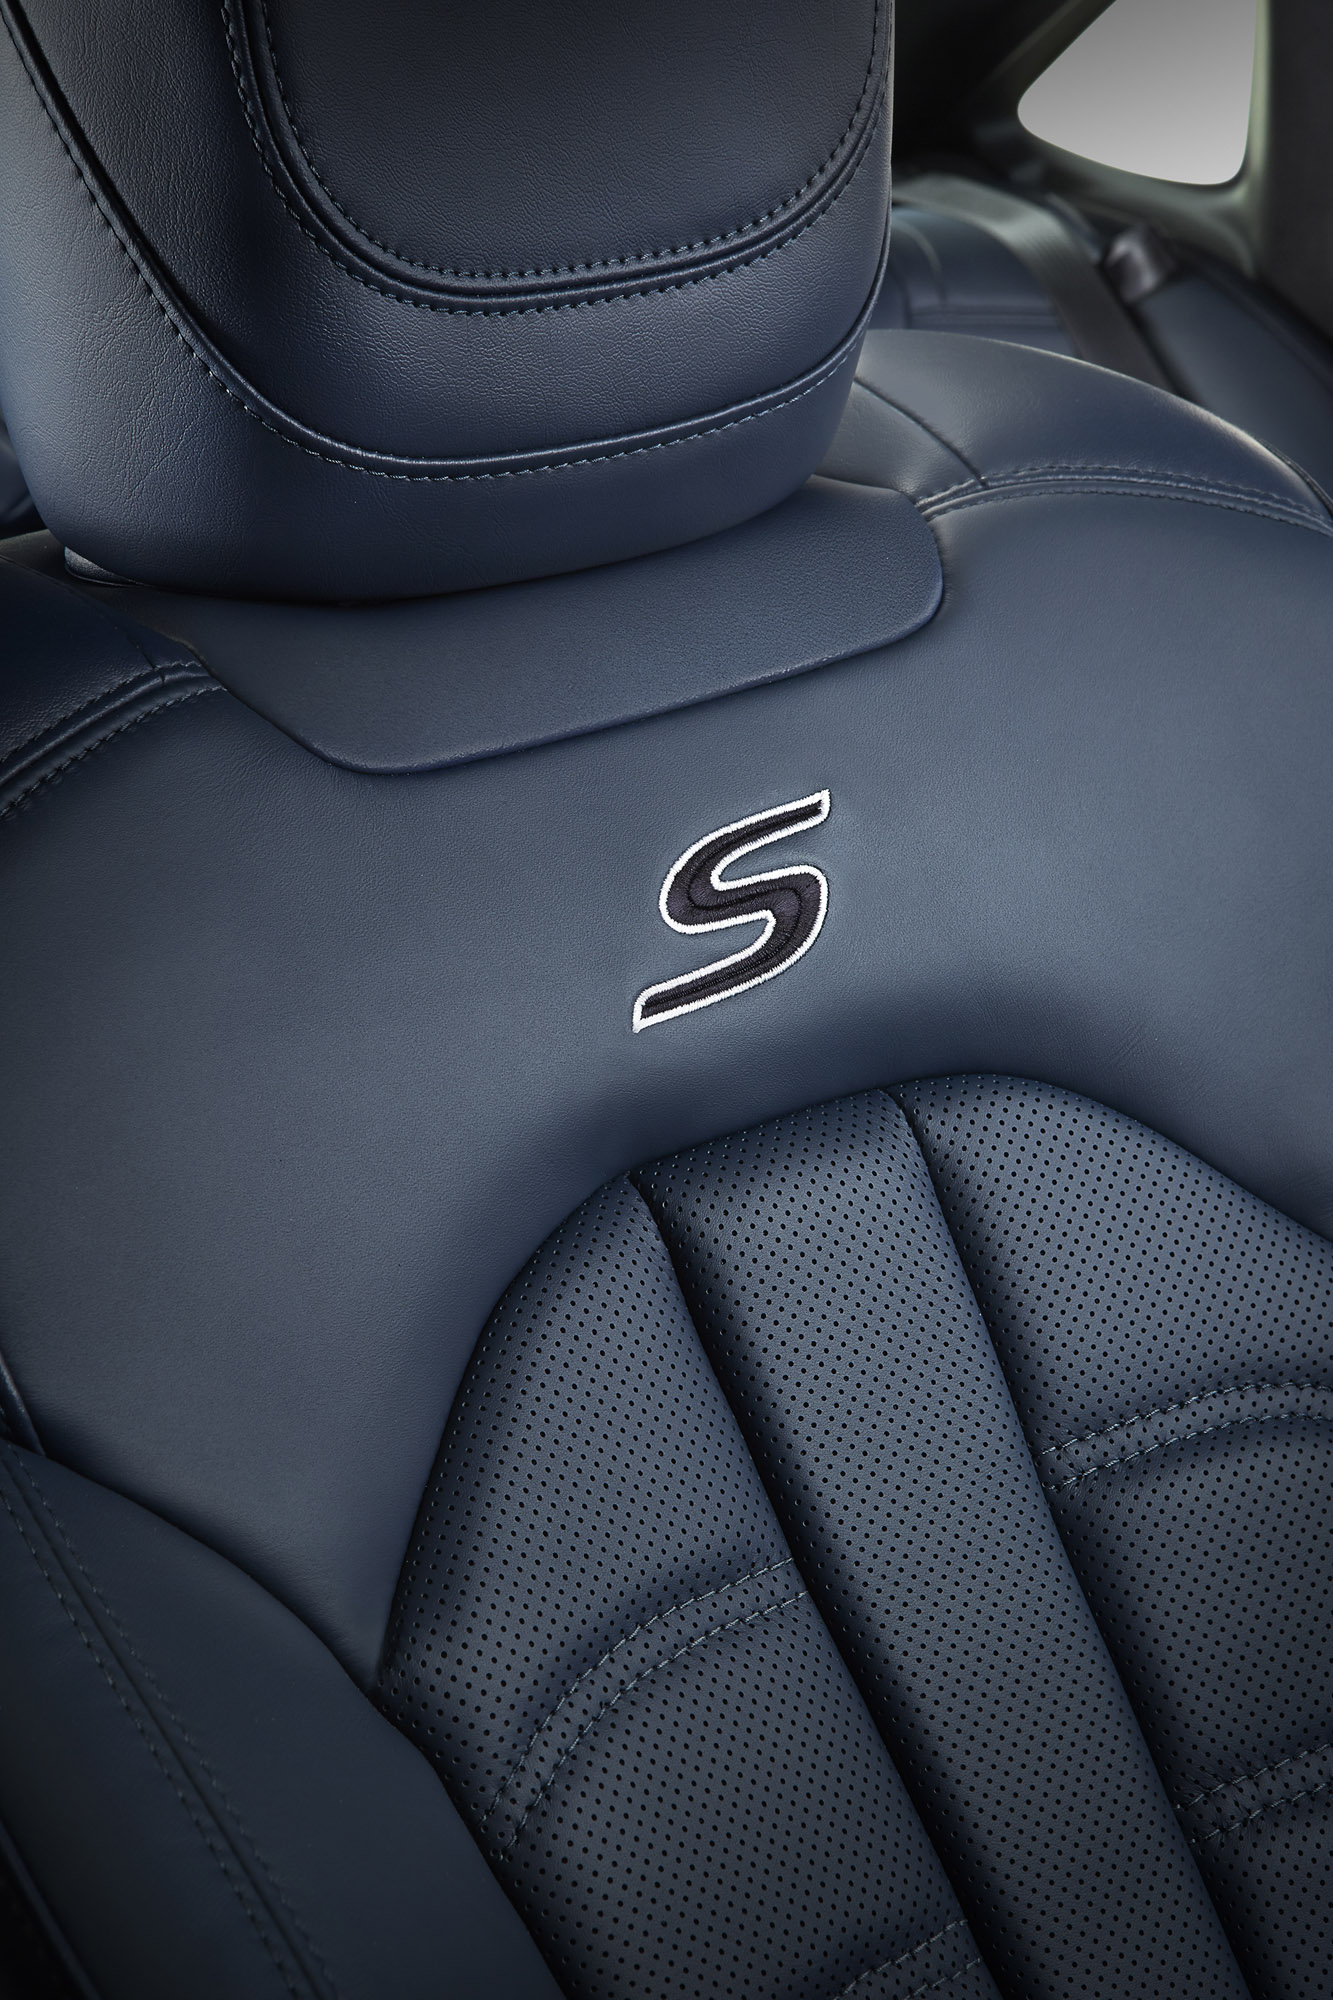 2015 Chrysler 200 Ambassador Blue Leather Interior Picture